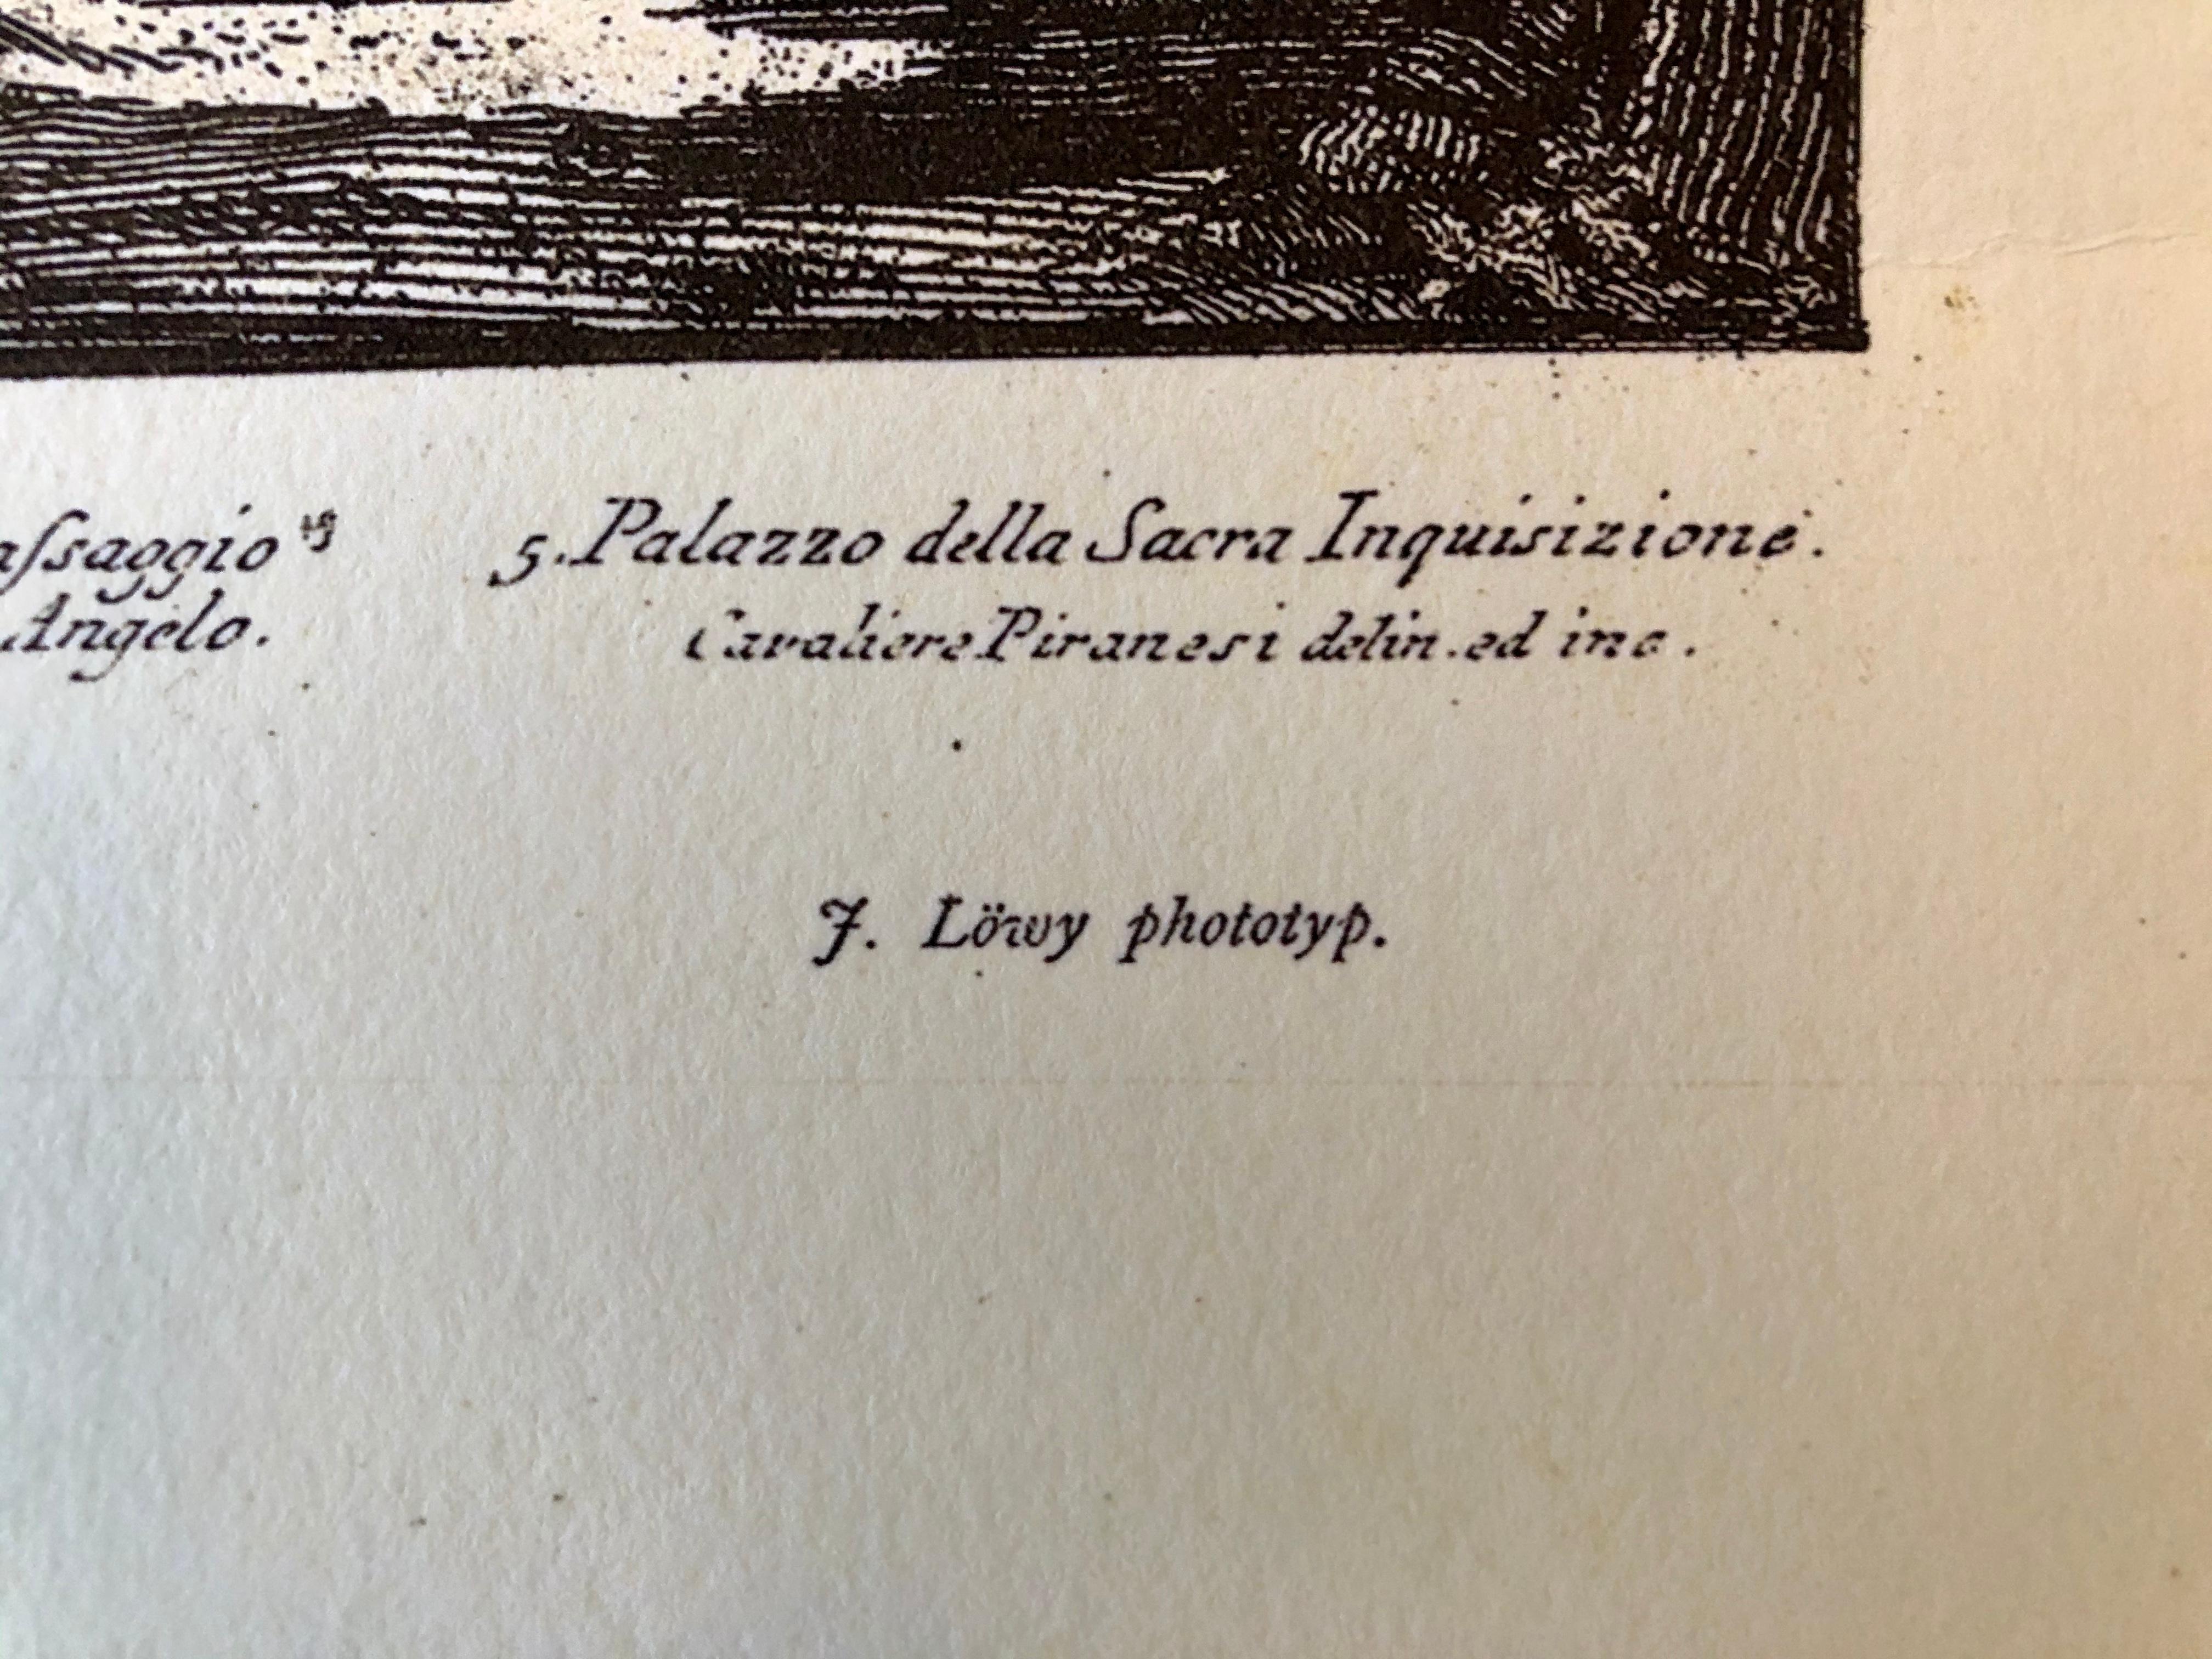 Fine Art Print Hahnemuehle, editioned, Giovanni Battista Piranesi print  in Verlag von AD Lehmann in Wien, end of 19 century. SalamonArt certificate will be included.